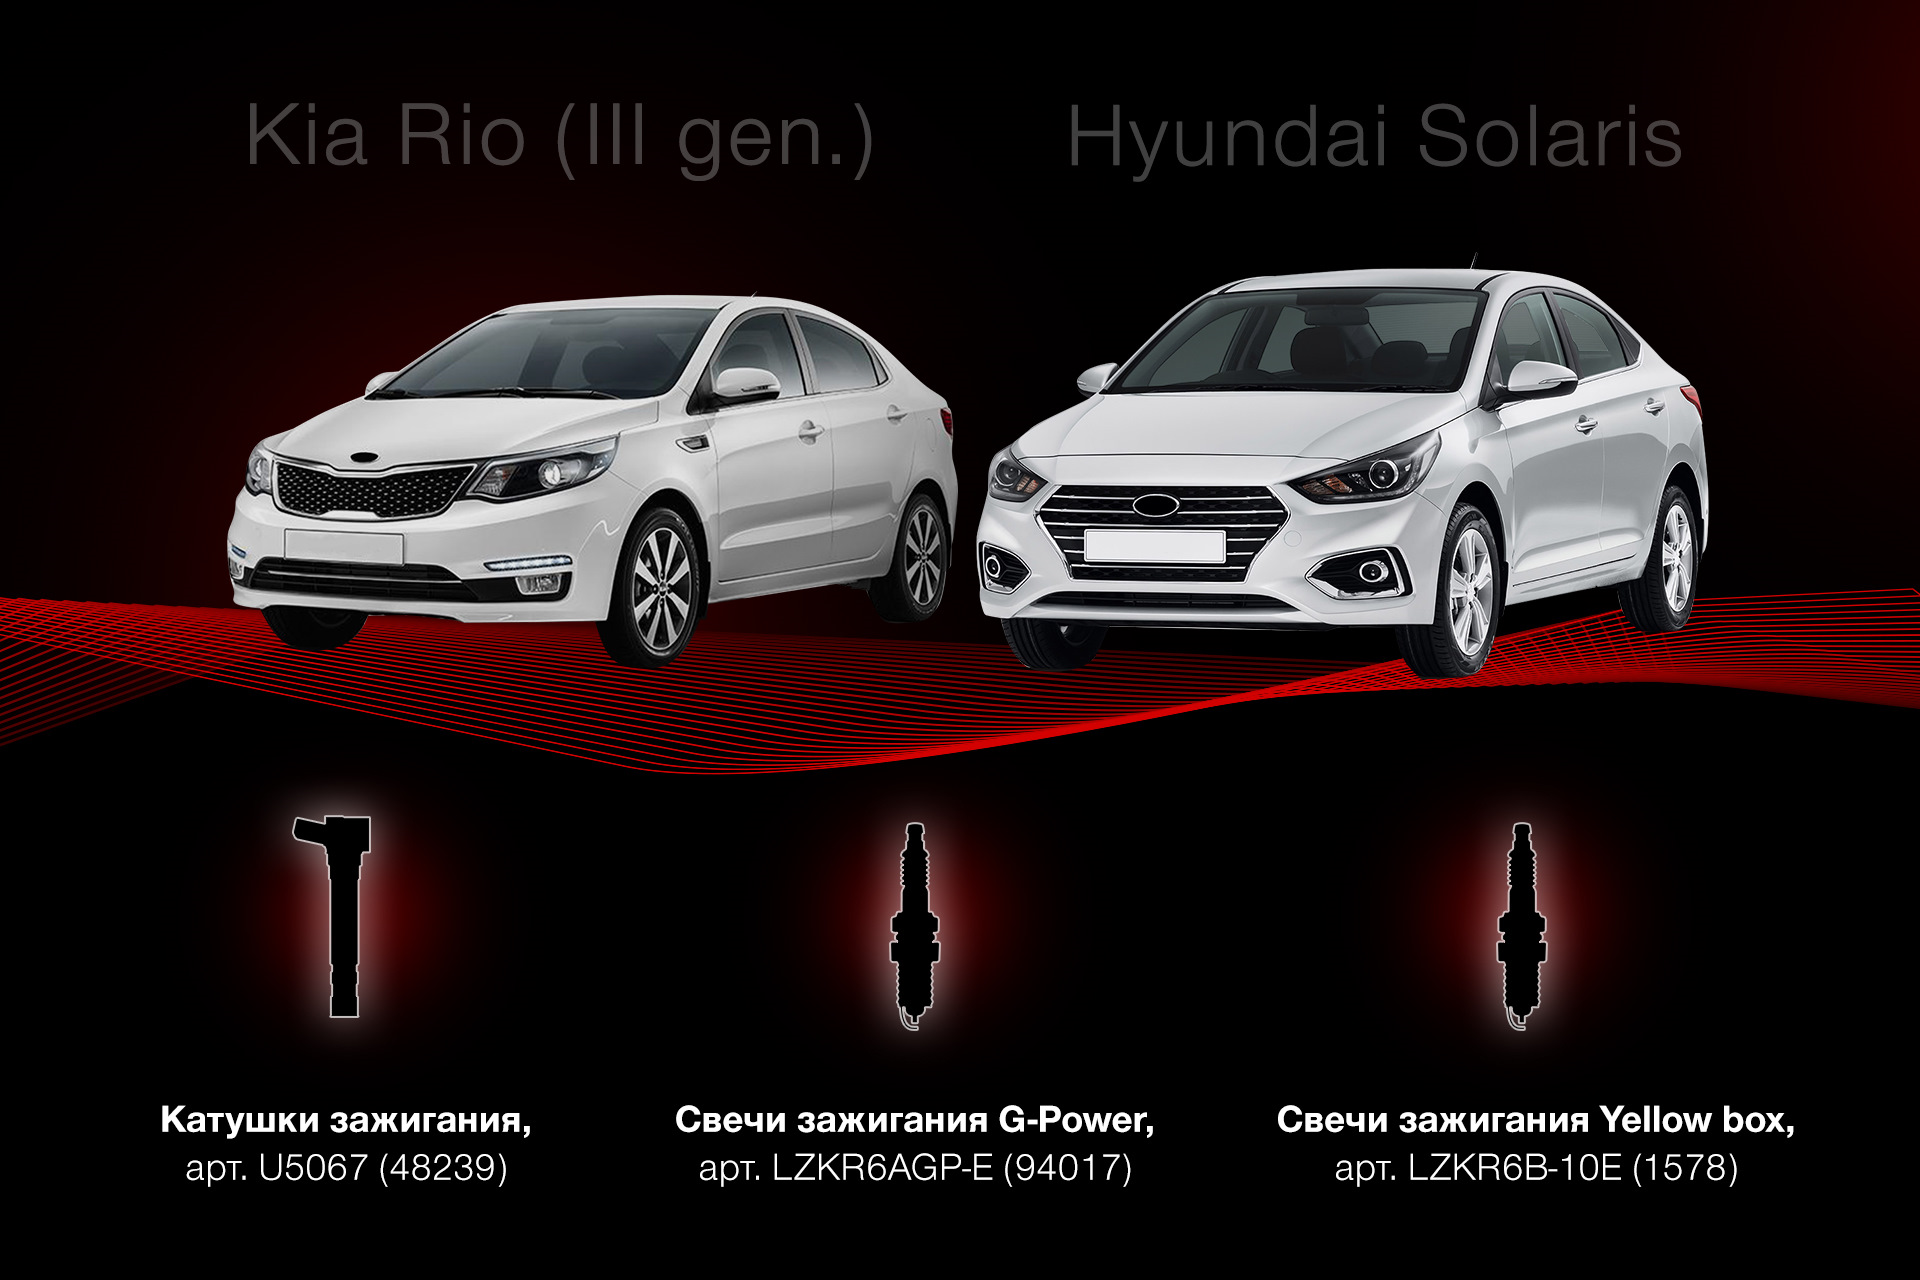 Киа рио или хендай солярис. Hyundai Solaris или Kia Rio 2021. Сравнение салона Рио и Соляриса. Реклама масла корейского для Солярис кия. Хендай Солярис и Киа Рио 2017 сравнение.